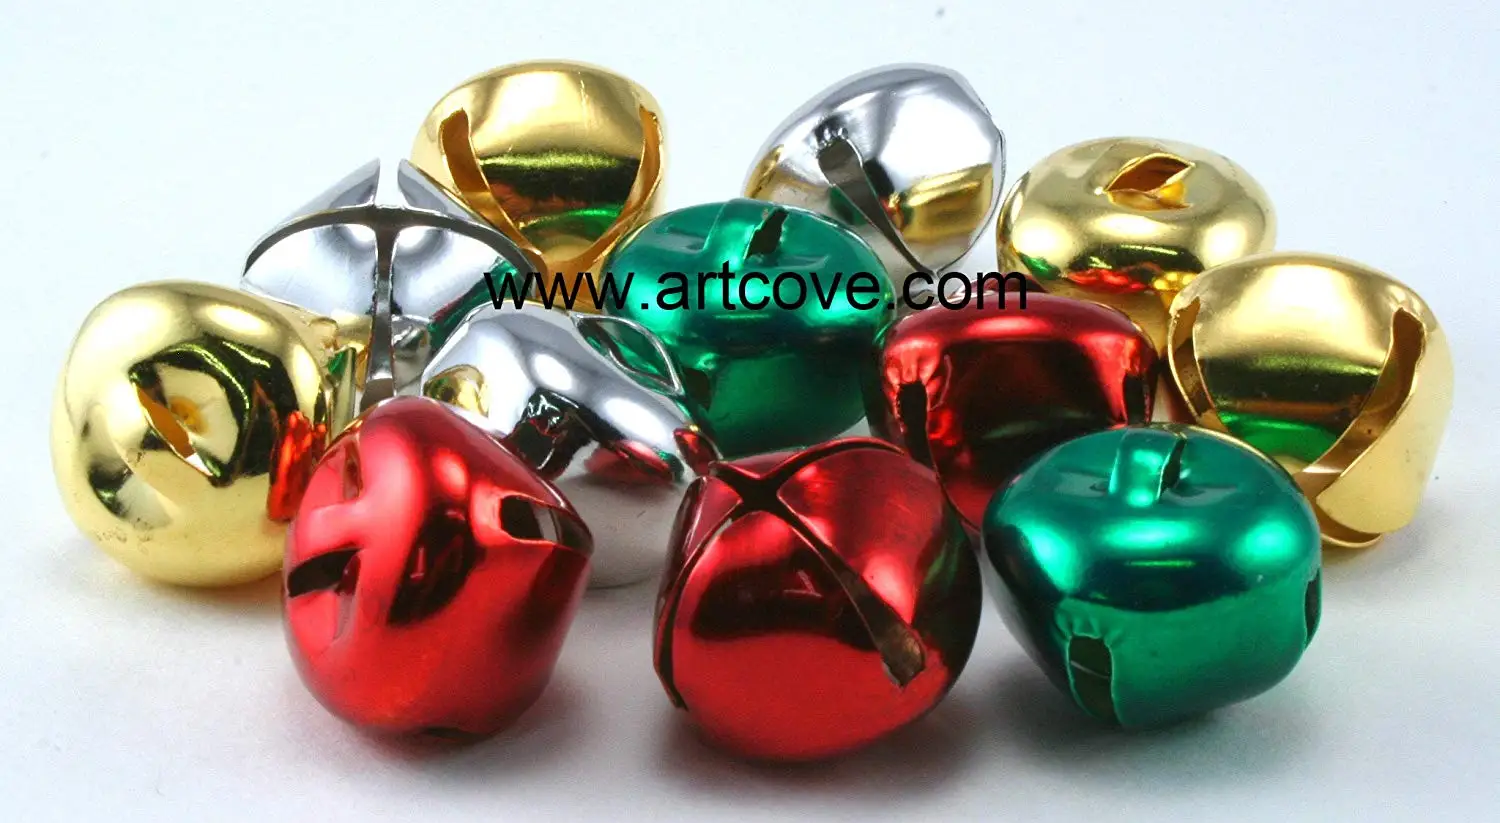 50 PCS 1 Inch//25mm Silver Christmas Jingle Bells Mini Small Bells Bulk for Festival /& Party Decorations//DIY Craft